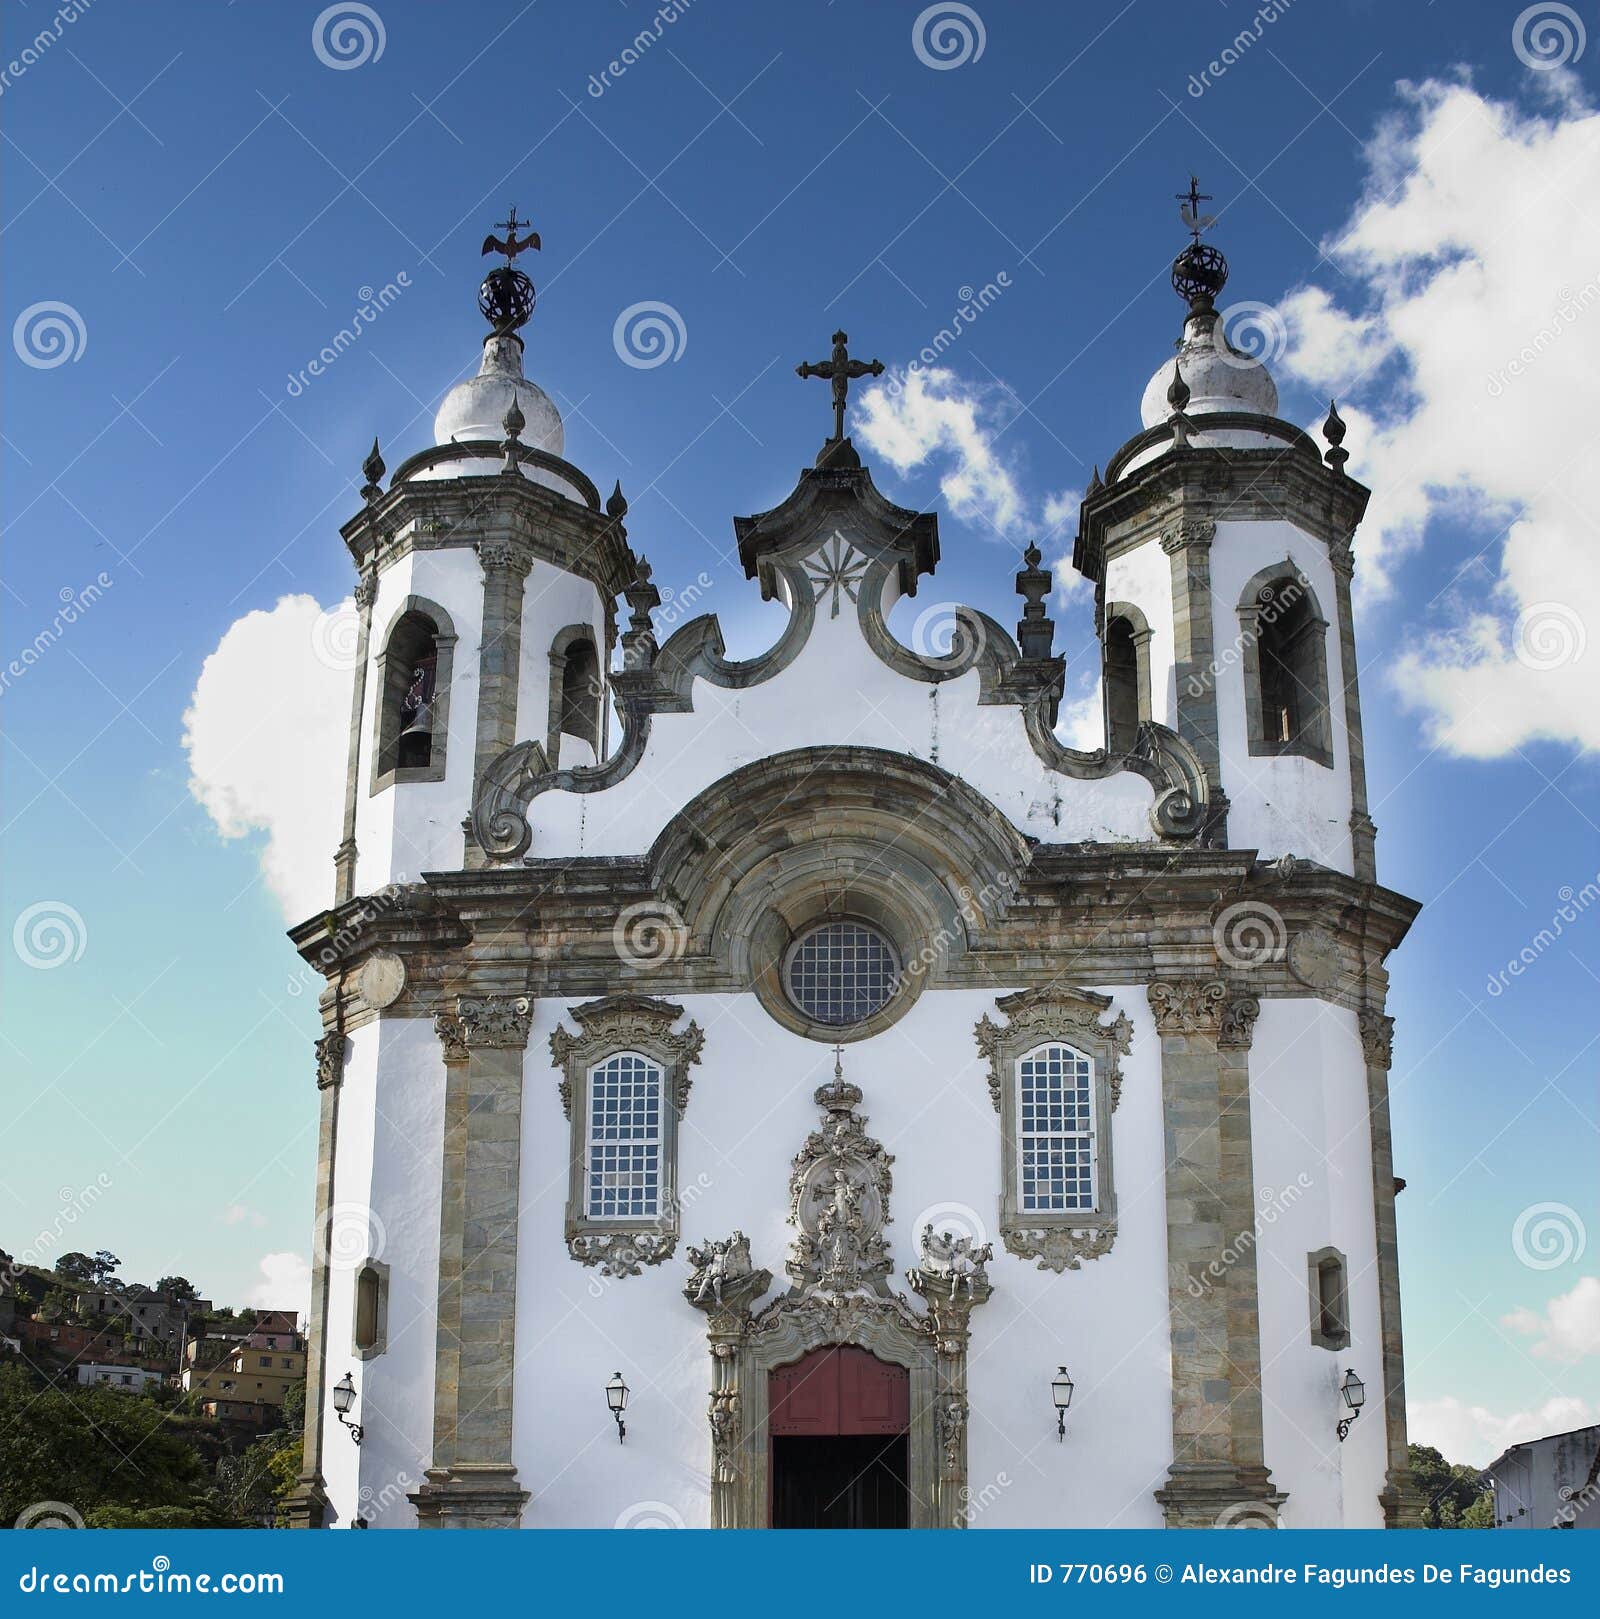 carmo baroque church sao joao del rey